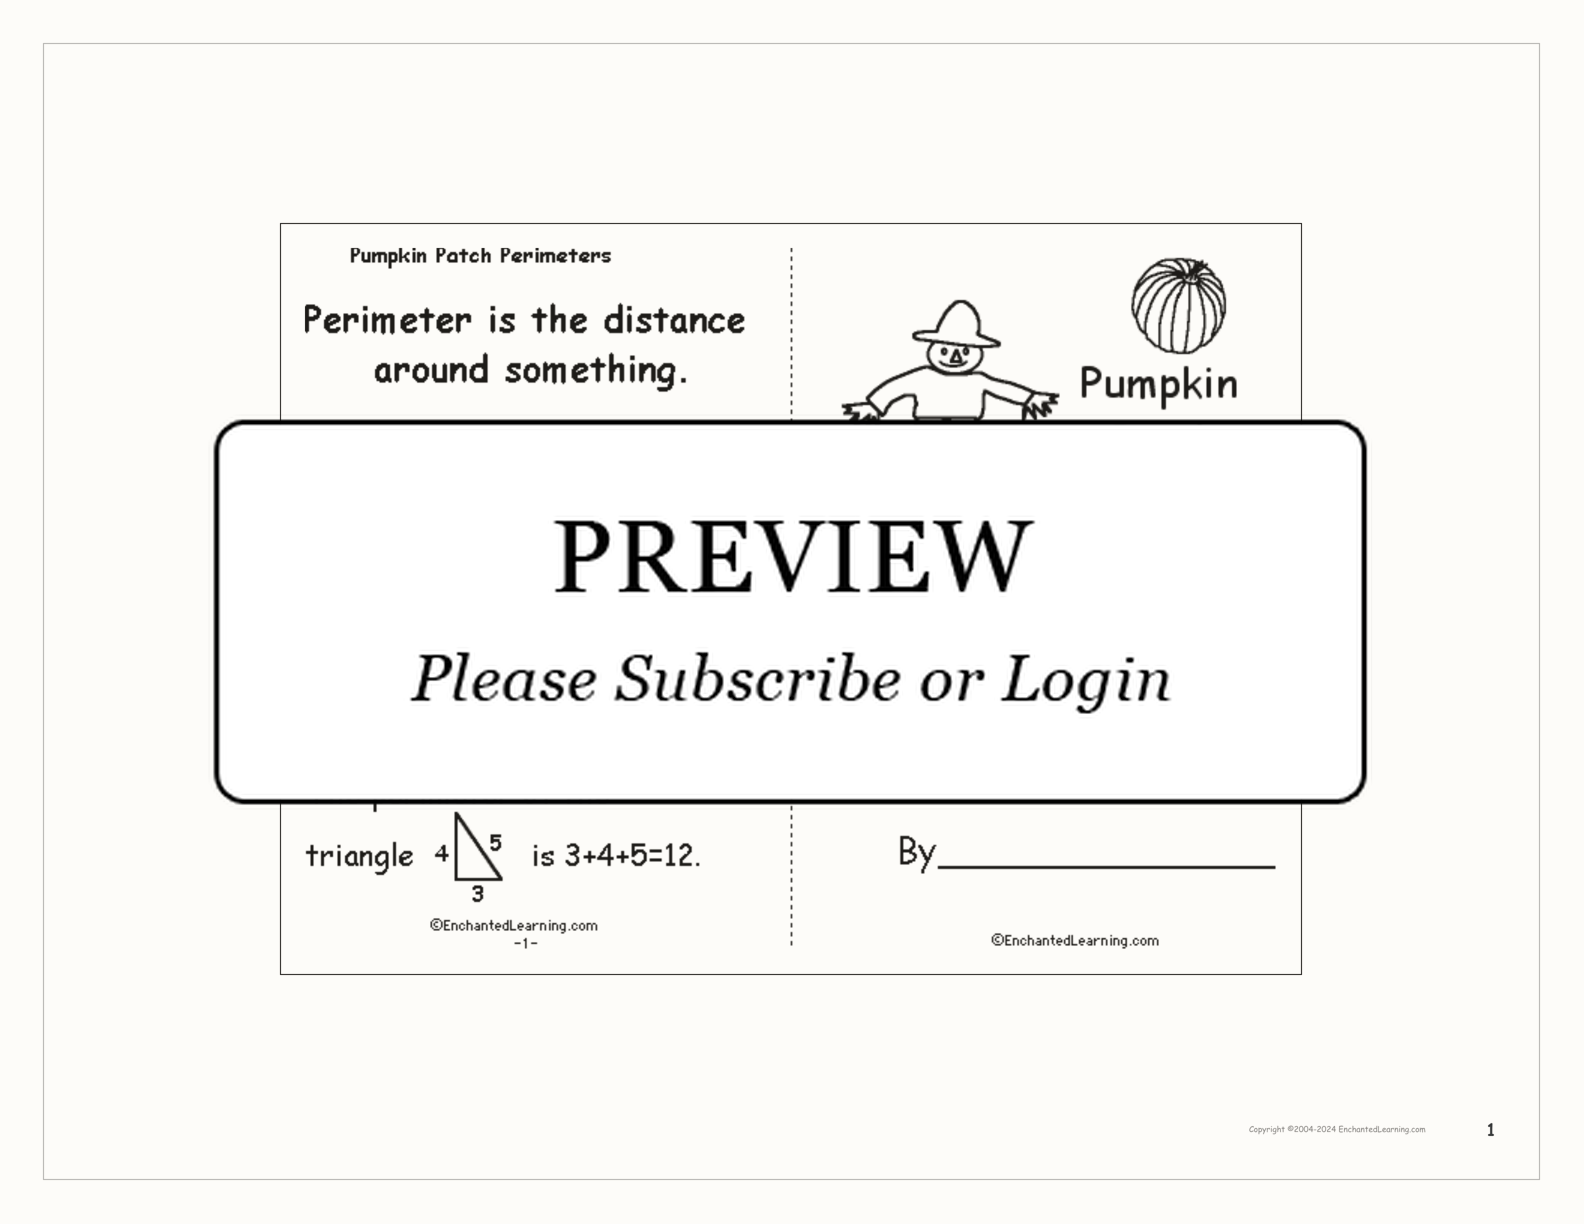 Pumpkin Patch Perimeters: A Printable Book interactive printout page 1